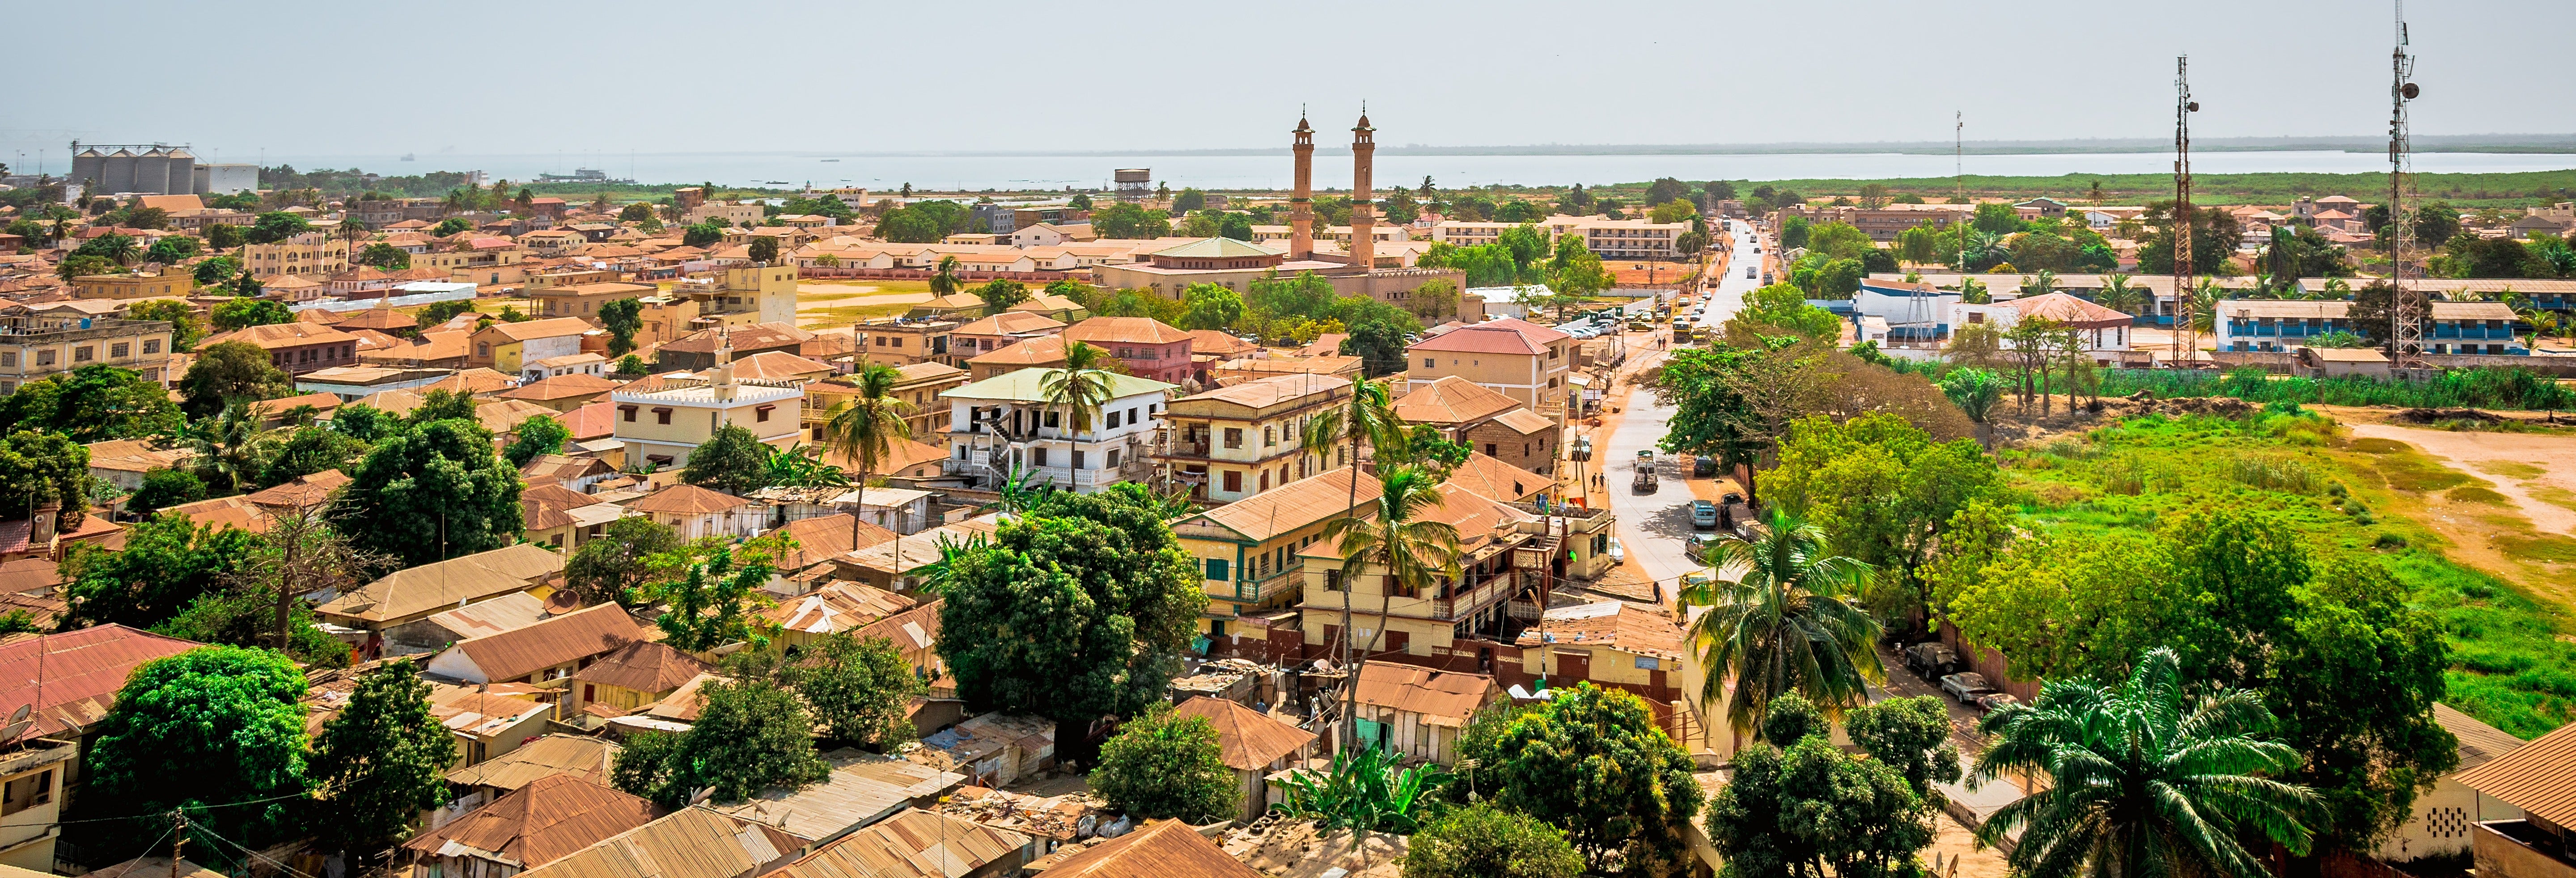 Banjul 